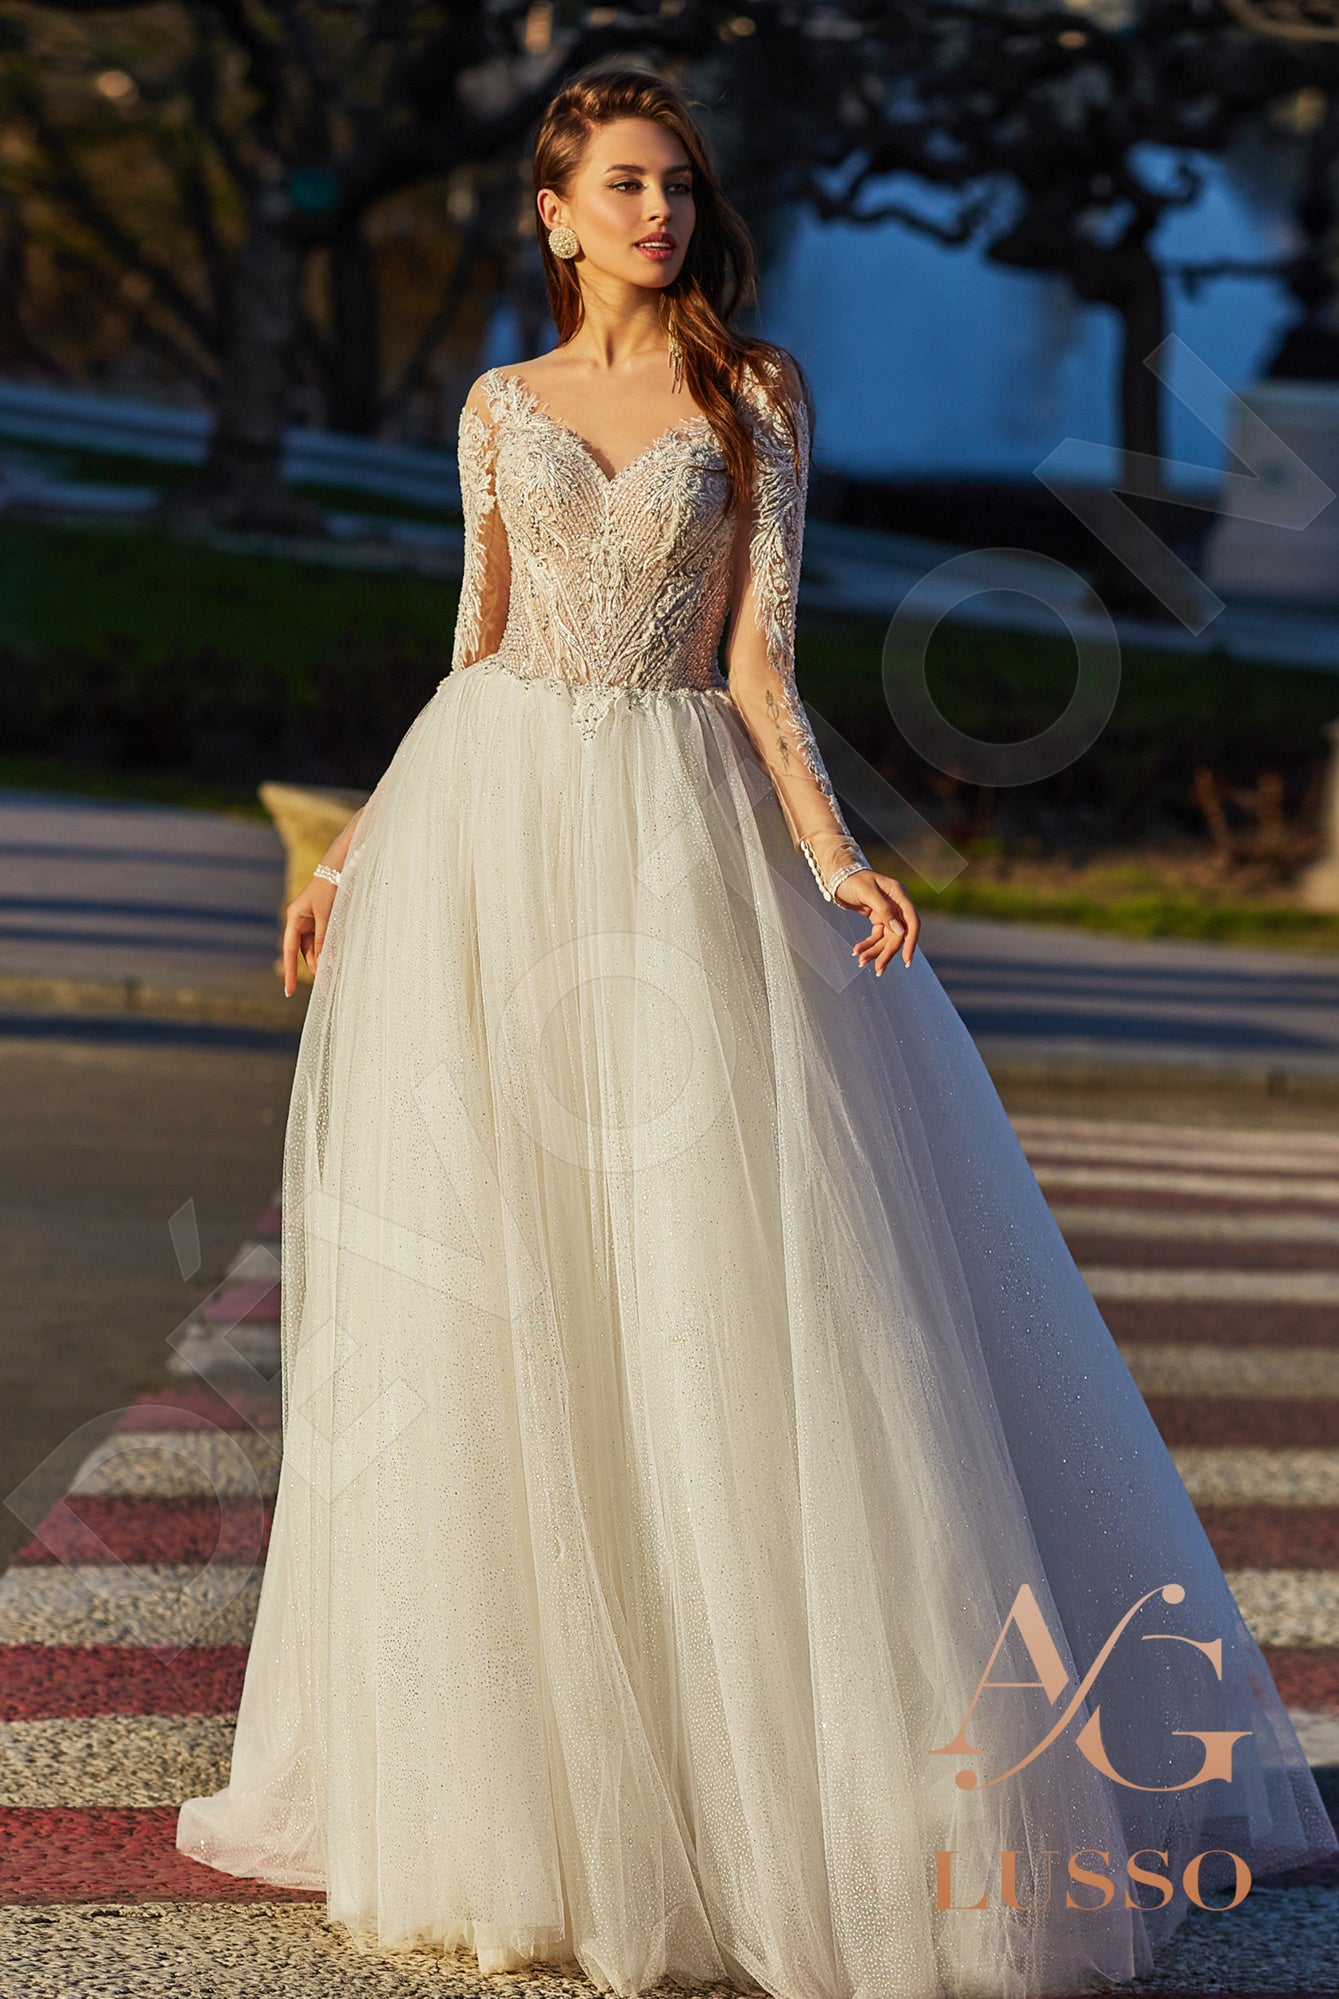 Lamissa Full back A-line Long sleeve Wedding Dress Front